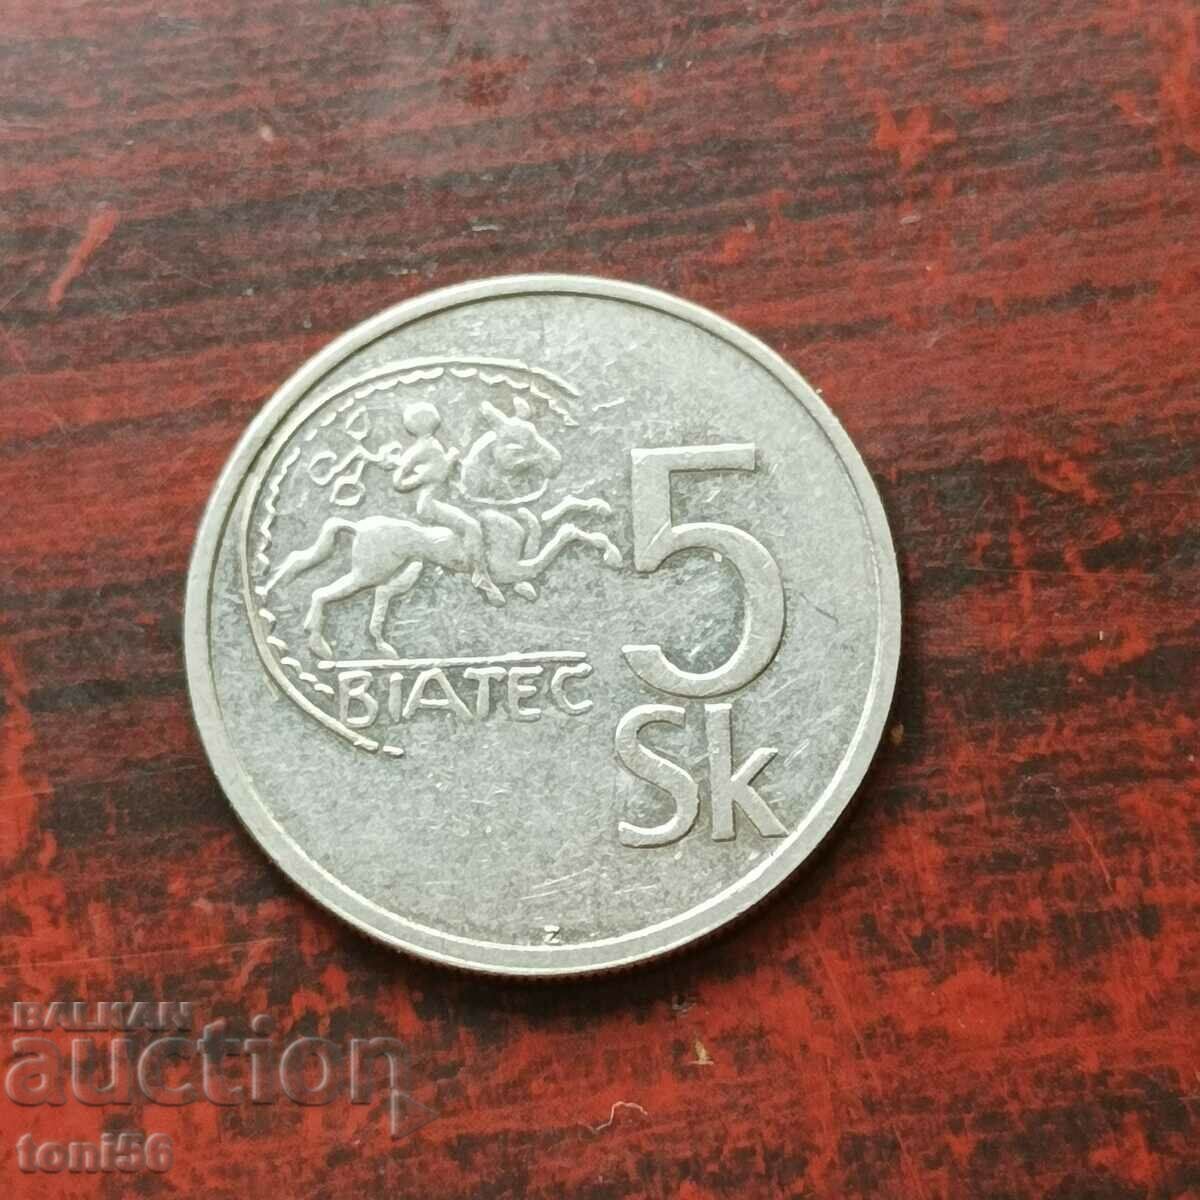 Slovakia 5 kroner 1993